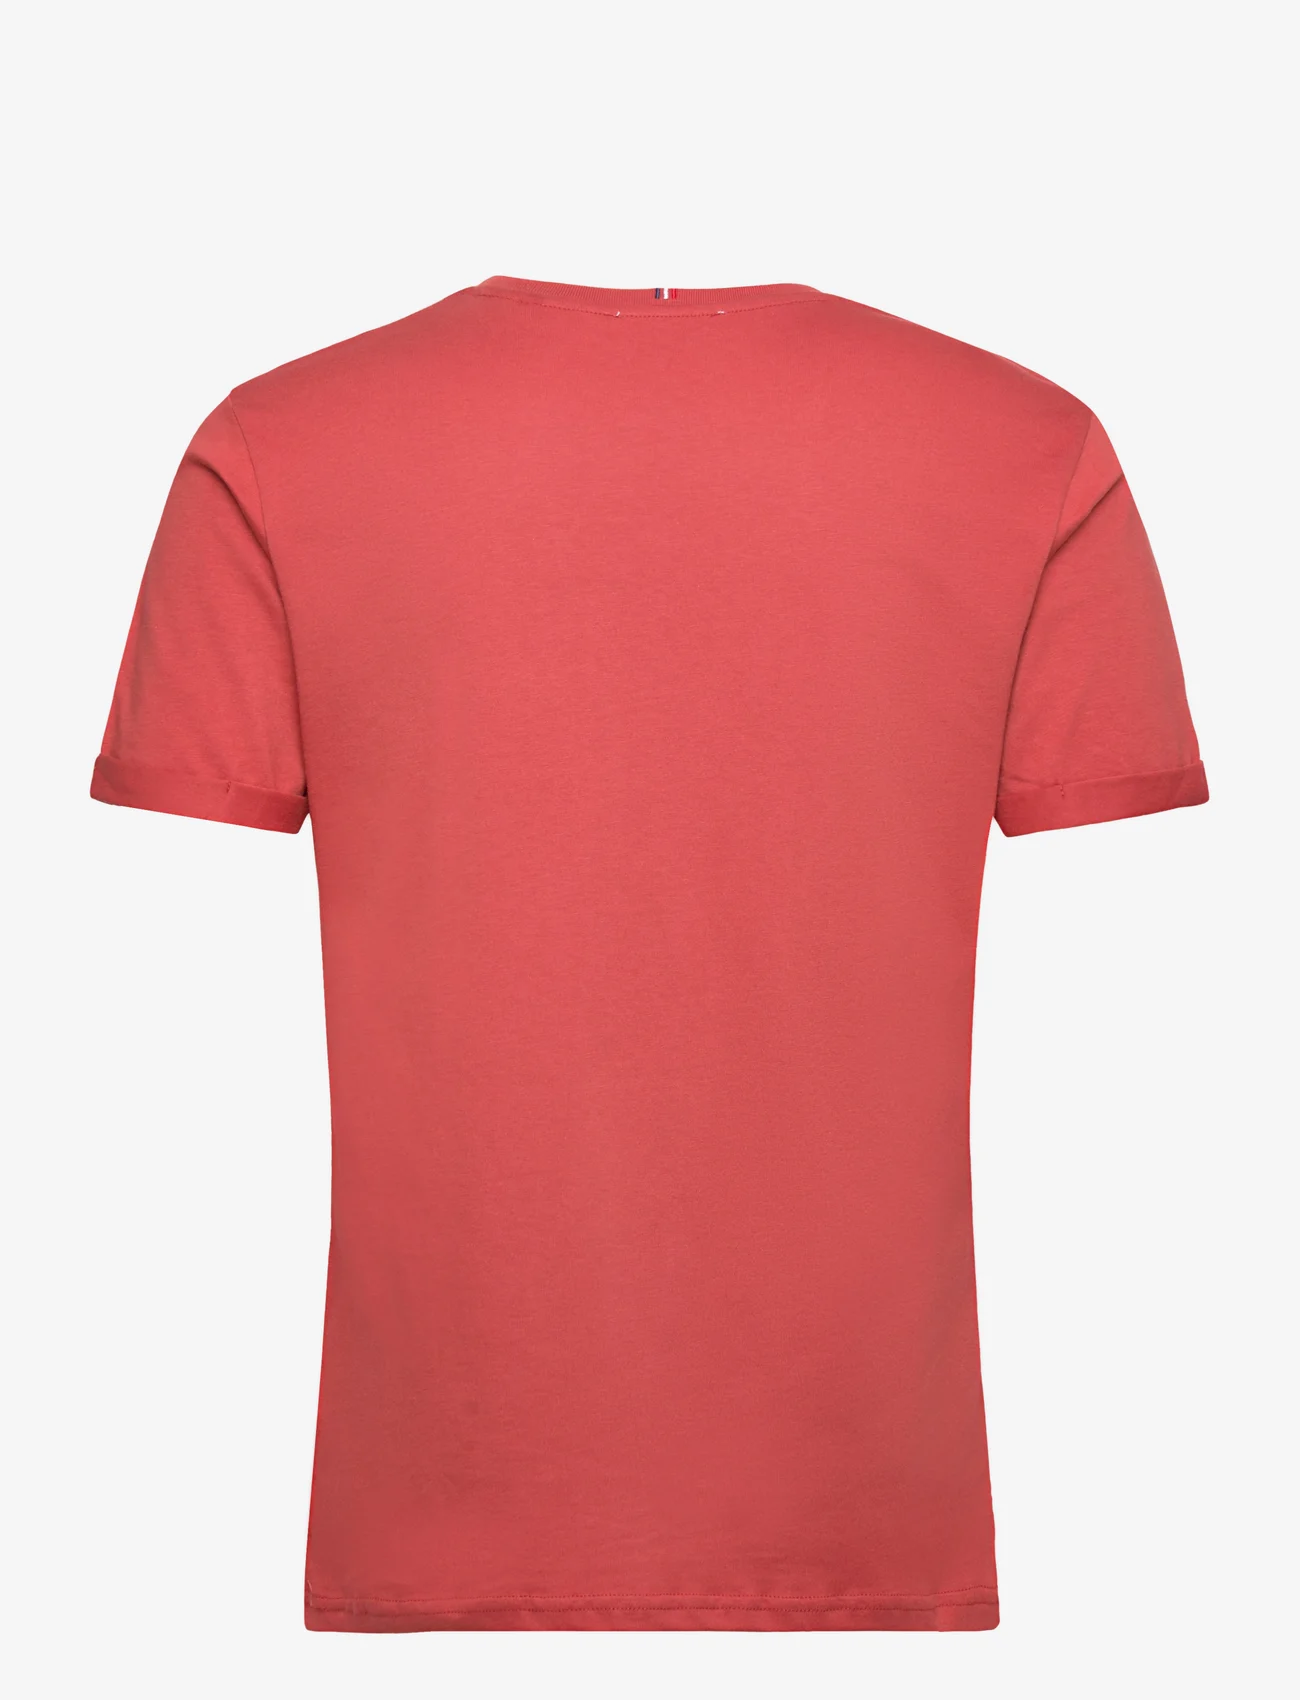 Les Deux - Nørregaard T-Shirt - Seasonal - najniższe ceny - rust red/orange - 1